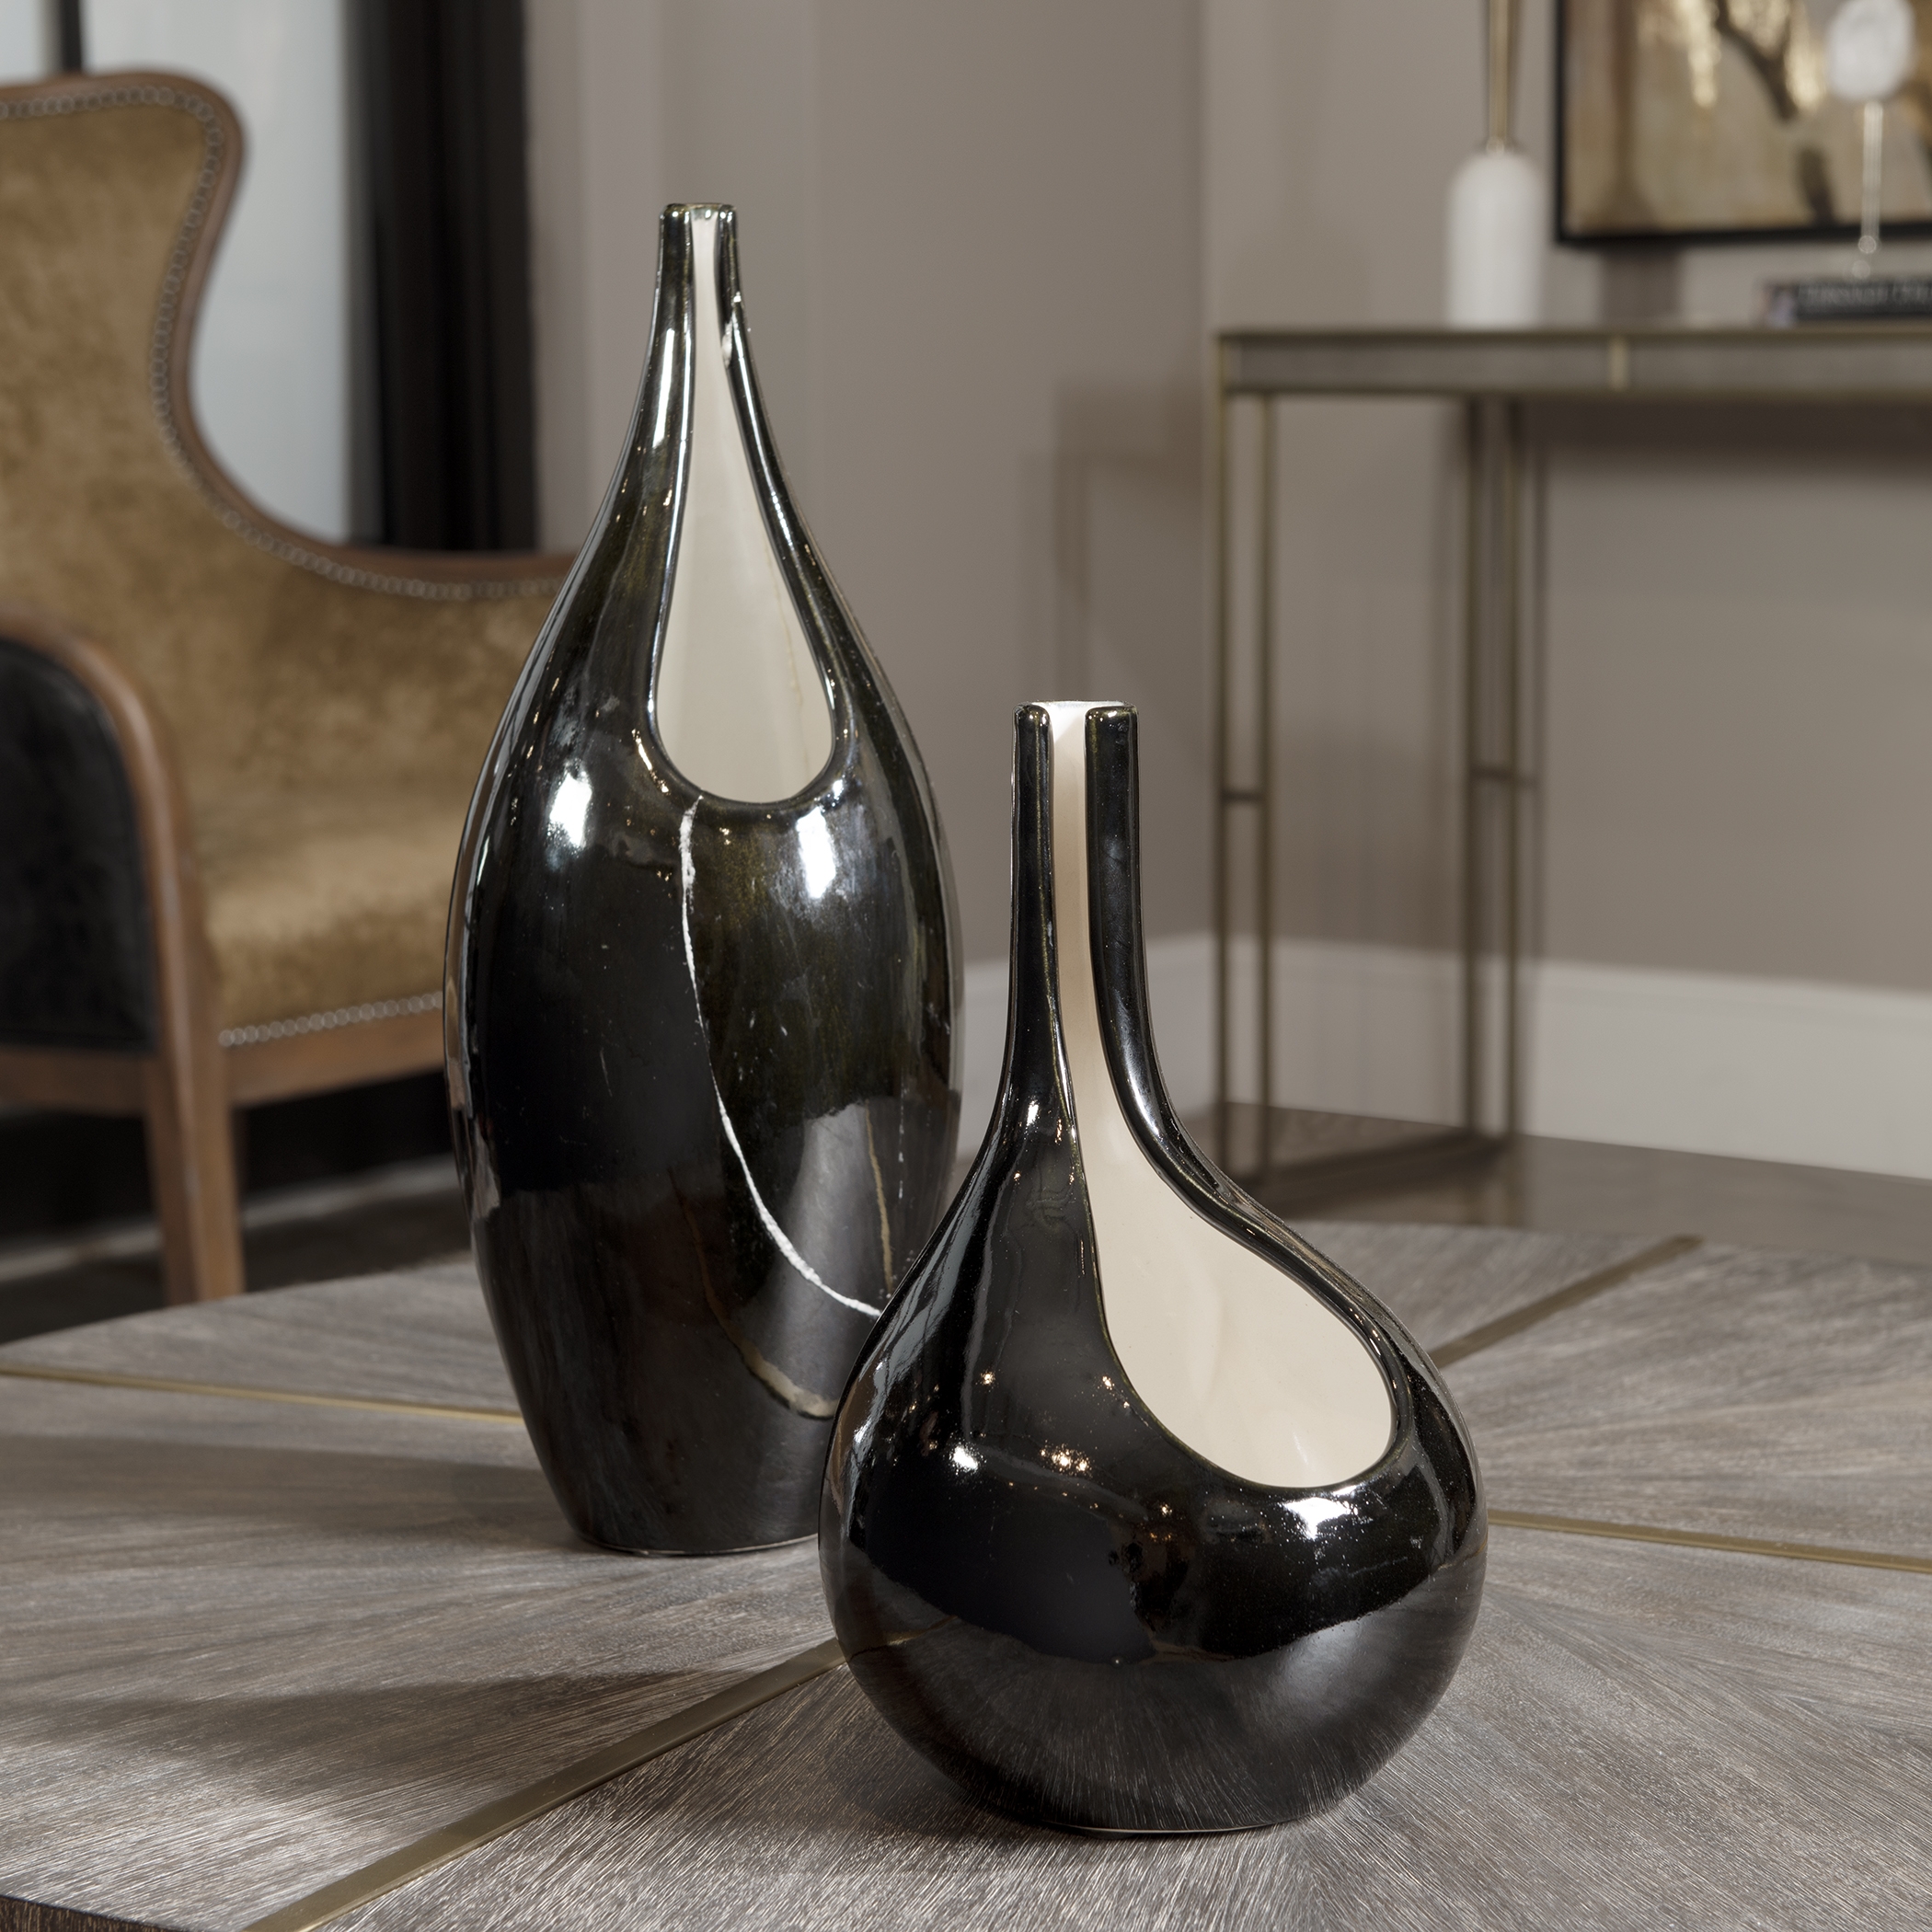 Lockwood Modern Vases, S/2 - Image 3